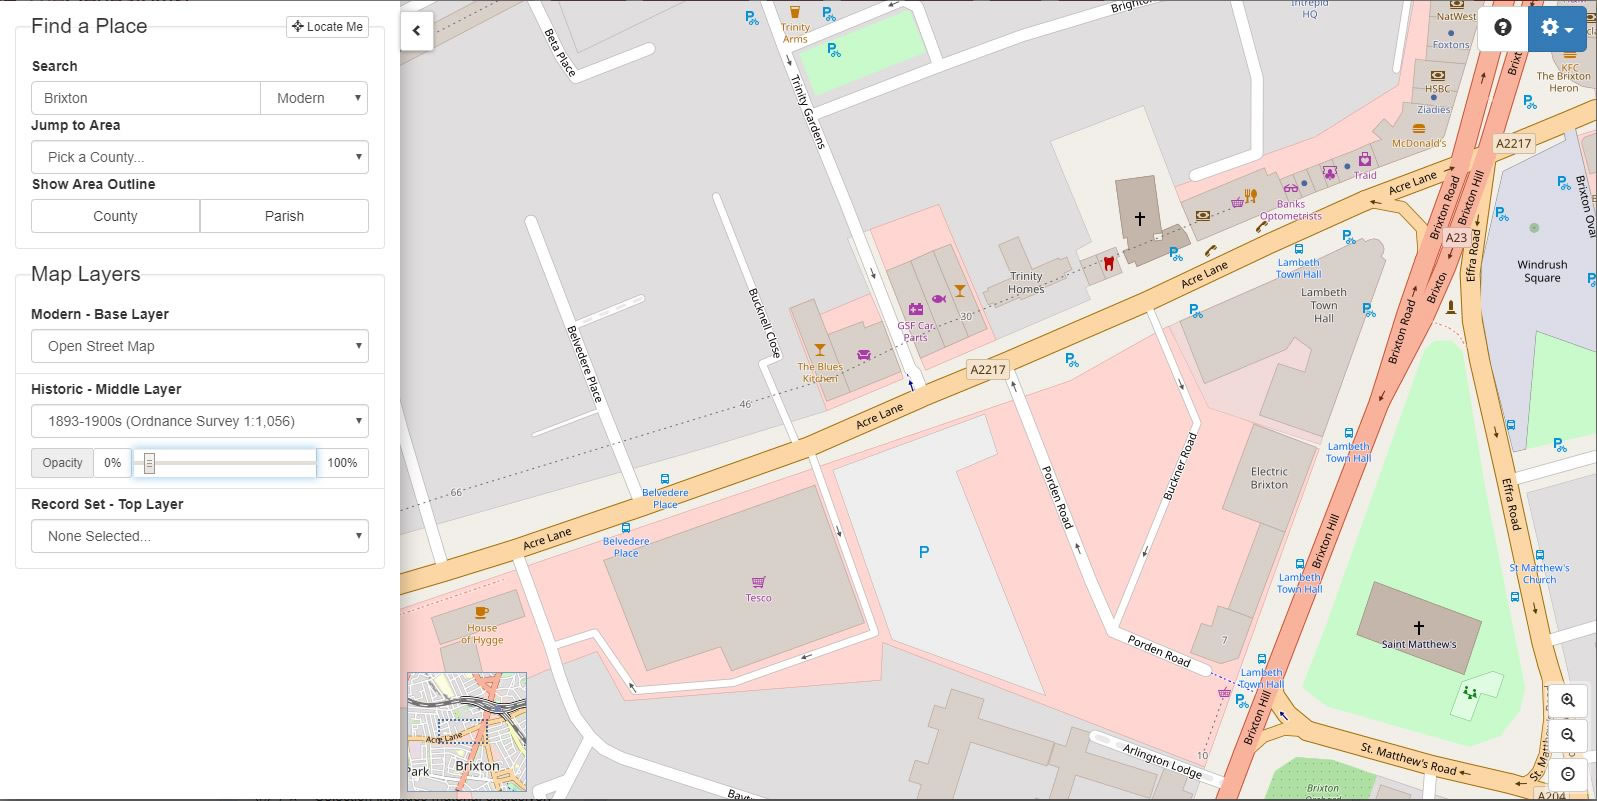 Site of Tesco supermarket on Acre Lane using Modern Open Street Map